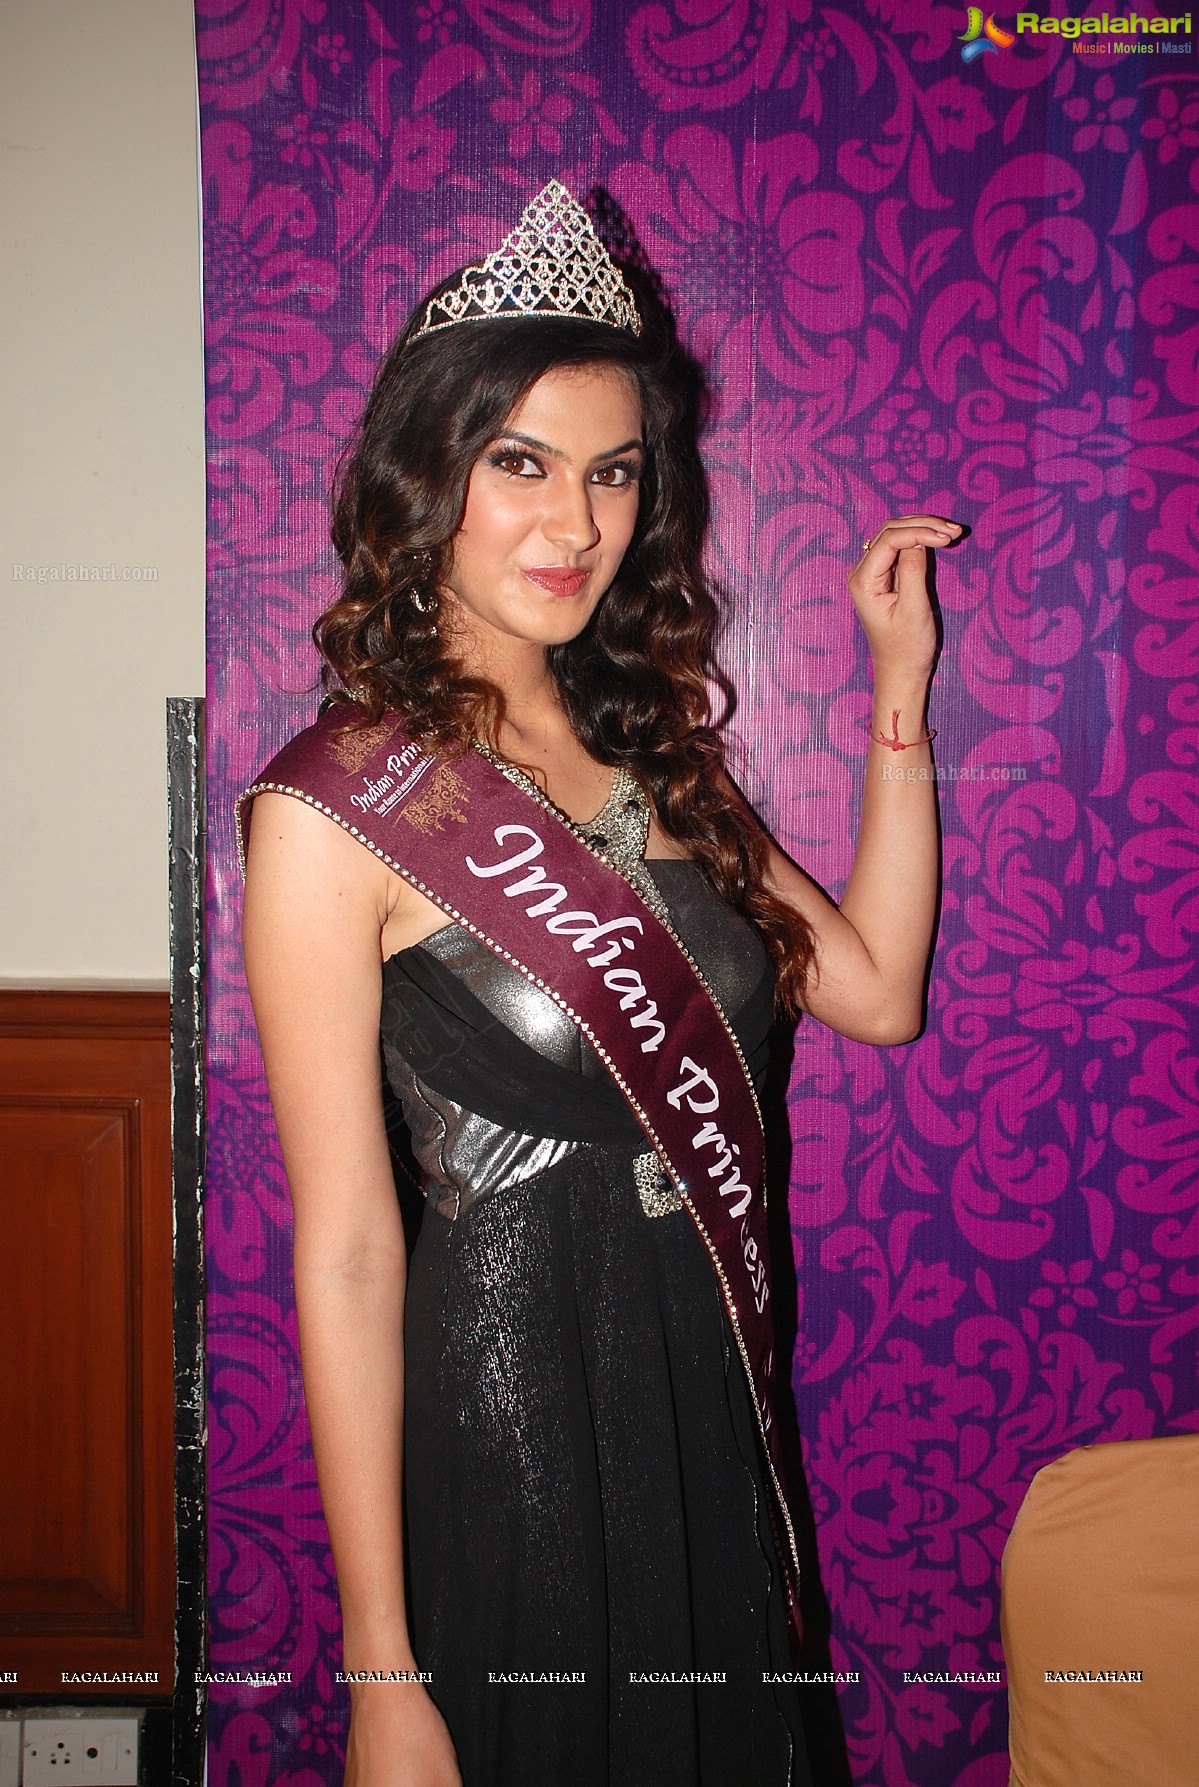 Indian Princess 2012 Auditions